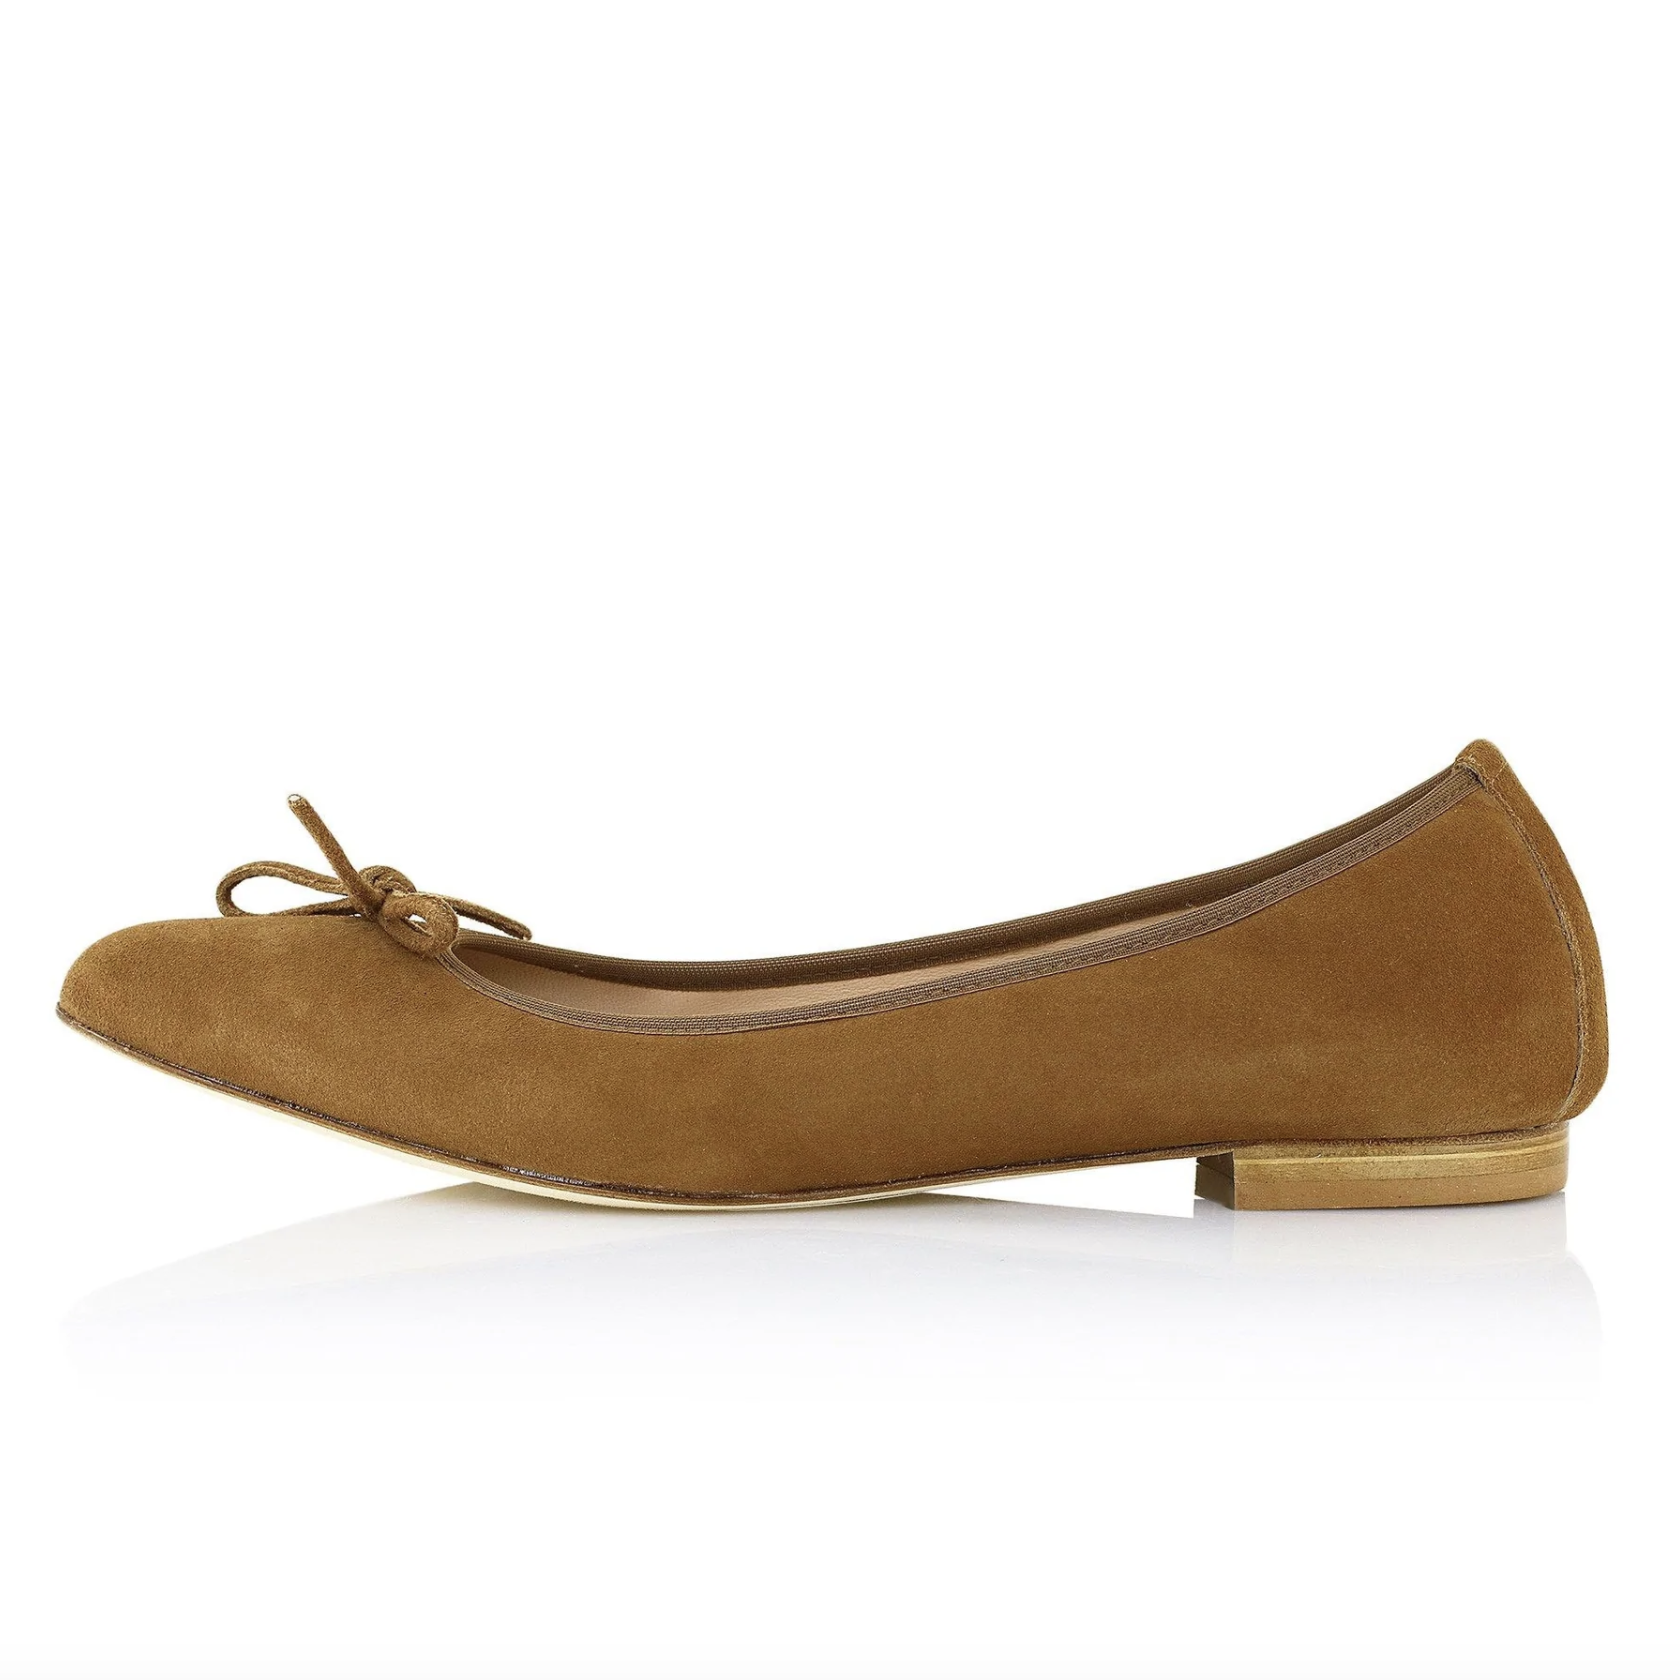 Tamaris Classic Ballet Flats gold-colored casual look Shoes Ballerinas 